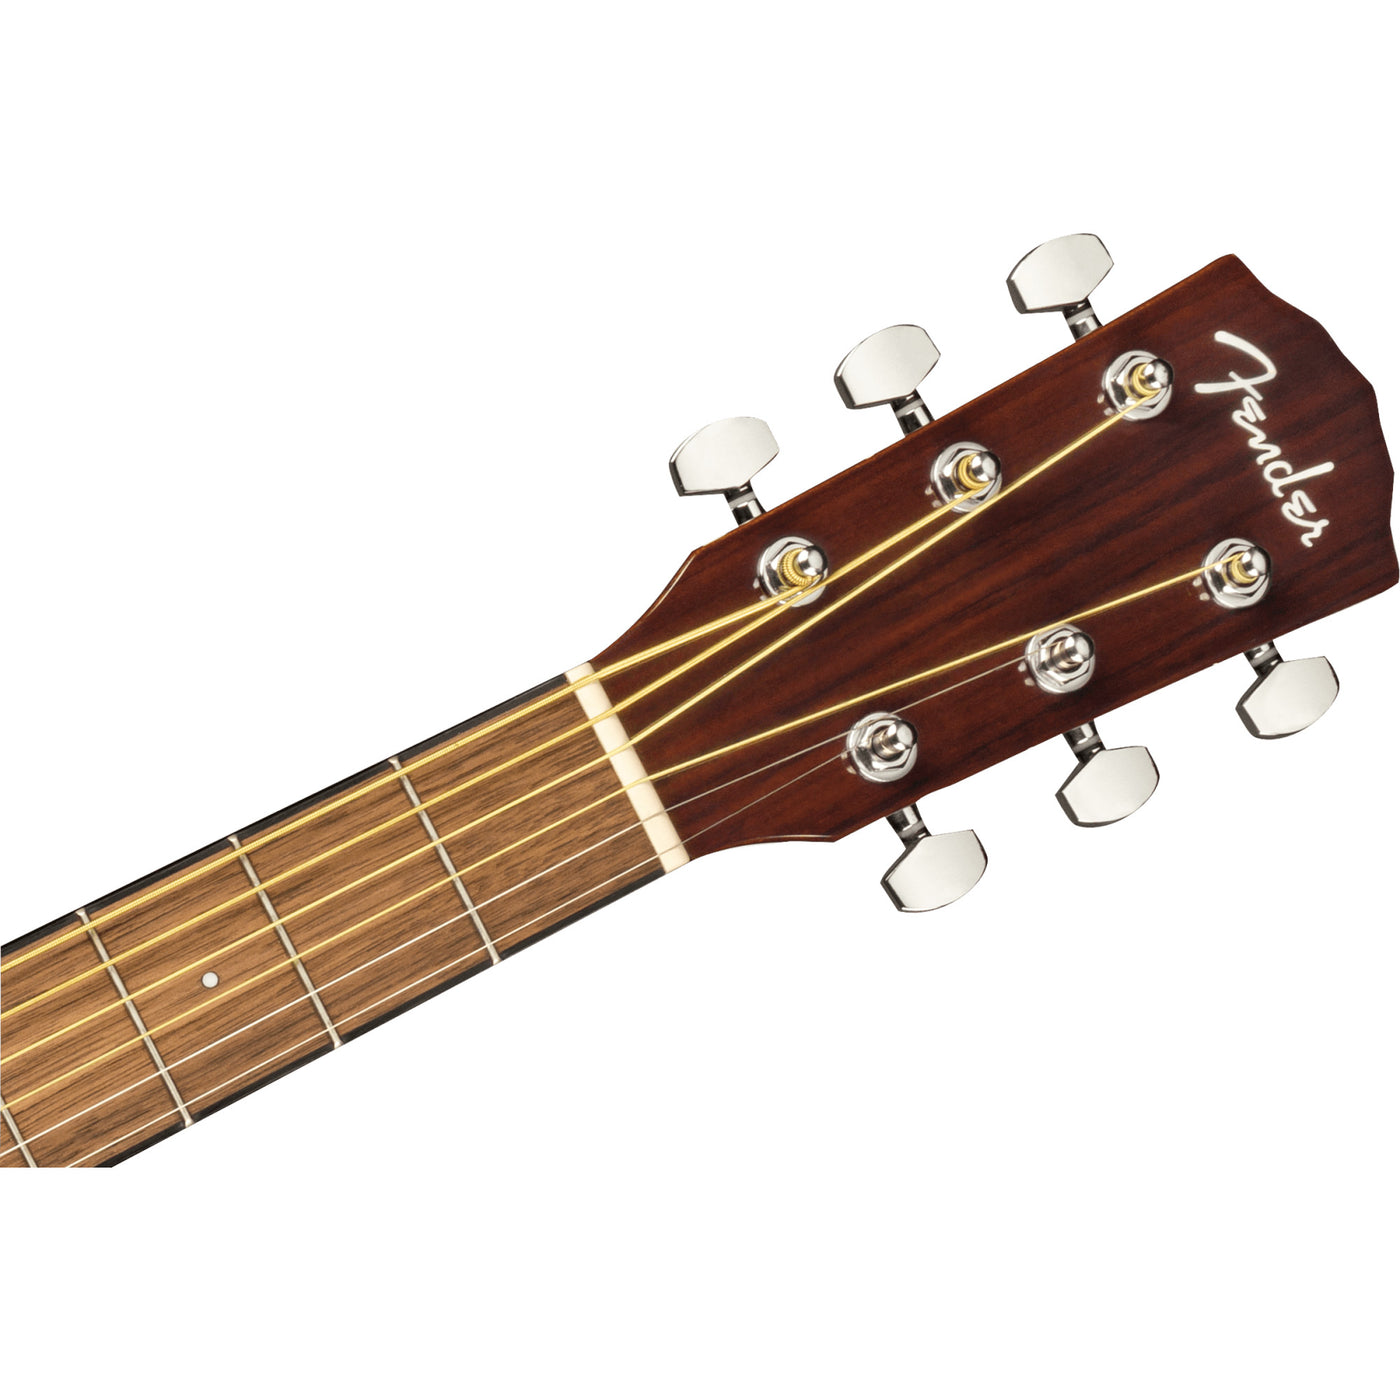 Fender CD-140SCE Dreadnought Acoustic Electric-Guitar with Case, Sunburst (0970213332)